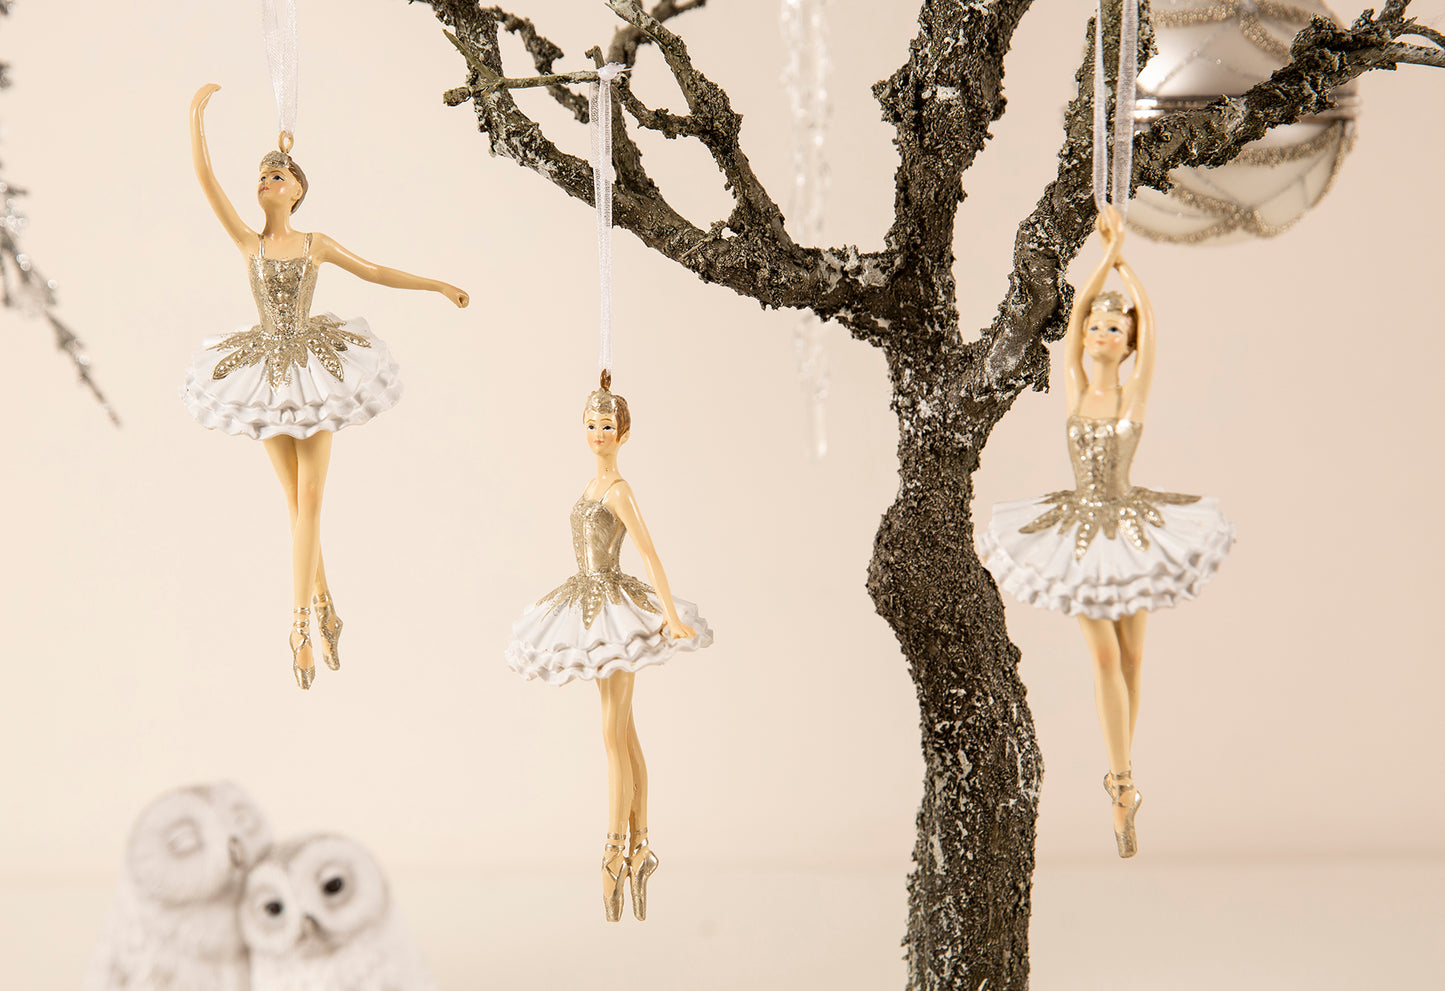 La Vida - Ballerinas for hanging, set of 3